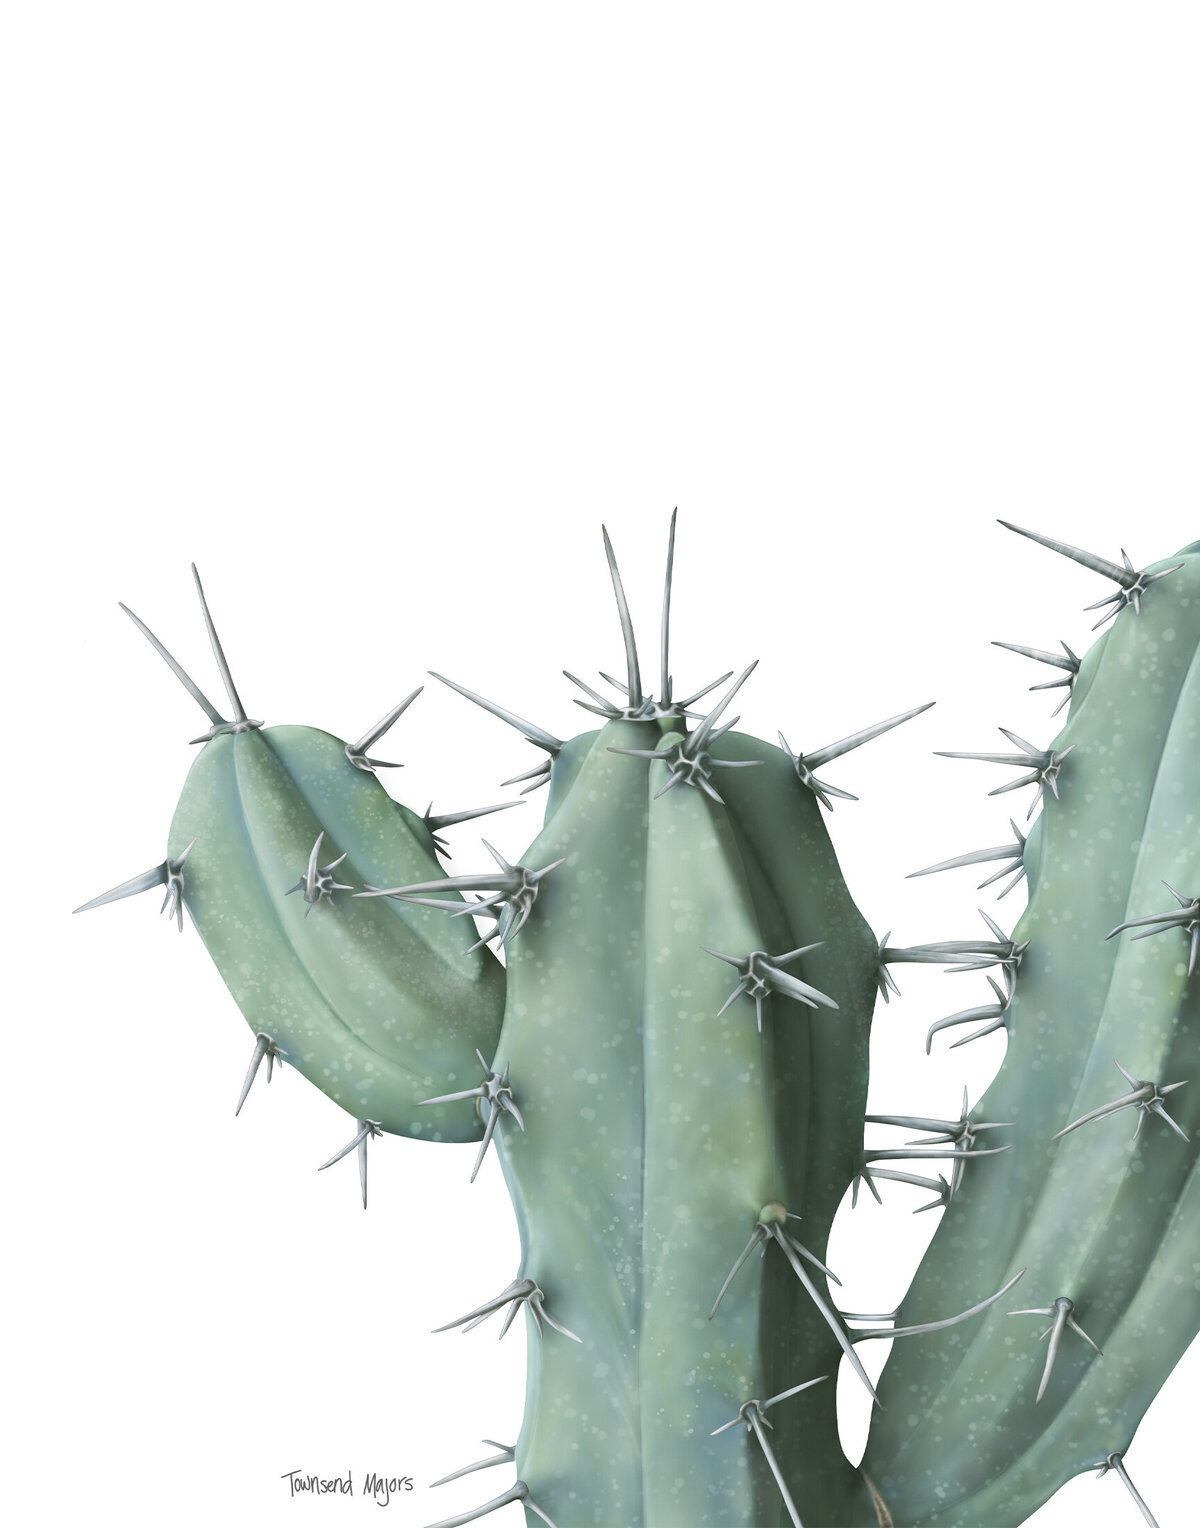 Townsend Majors illustration of a blue myrtle cactus